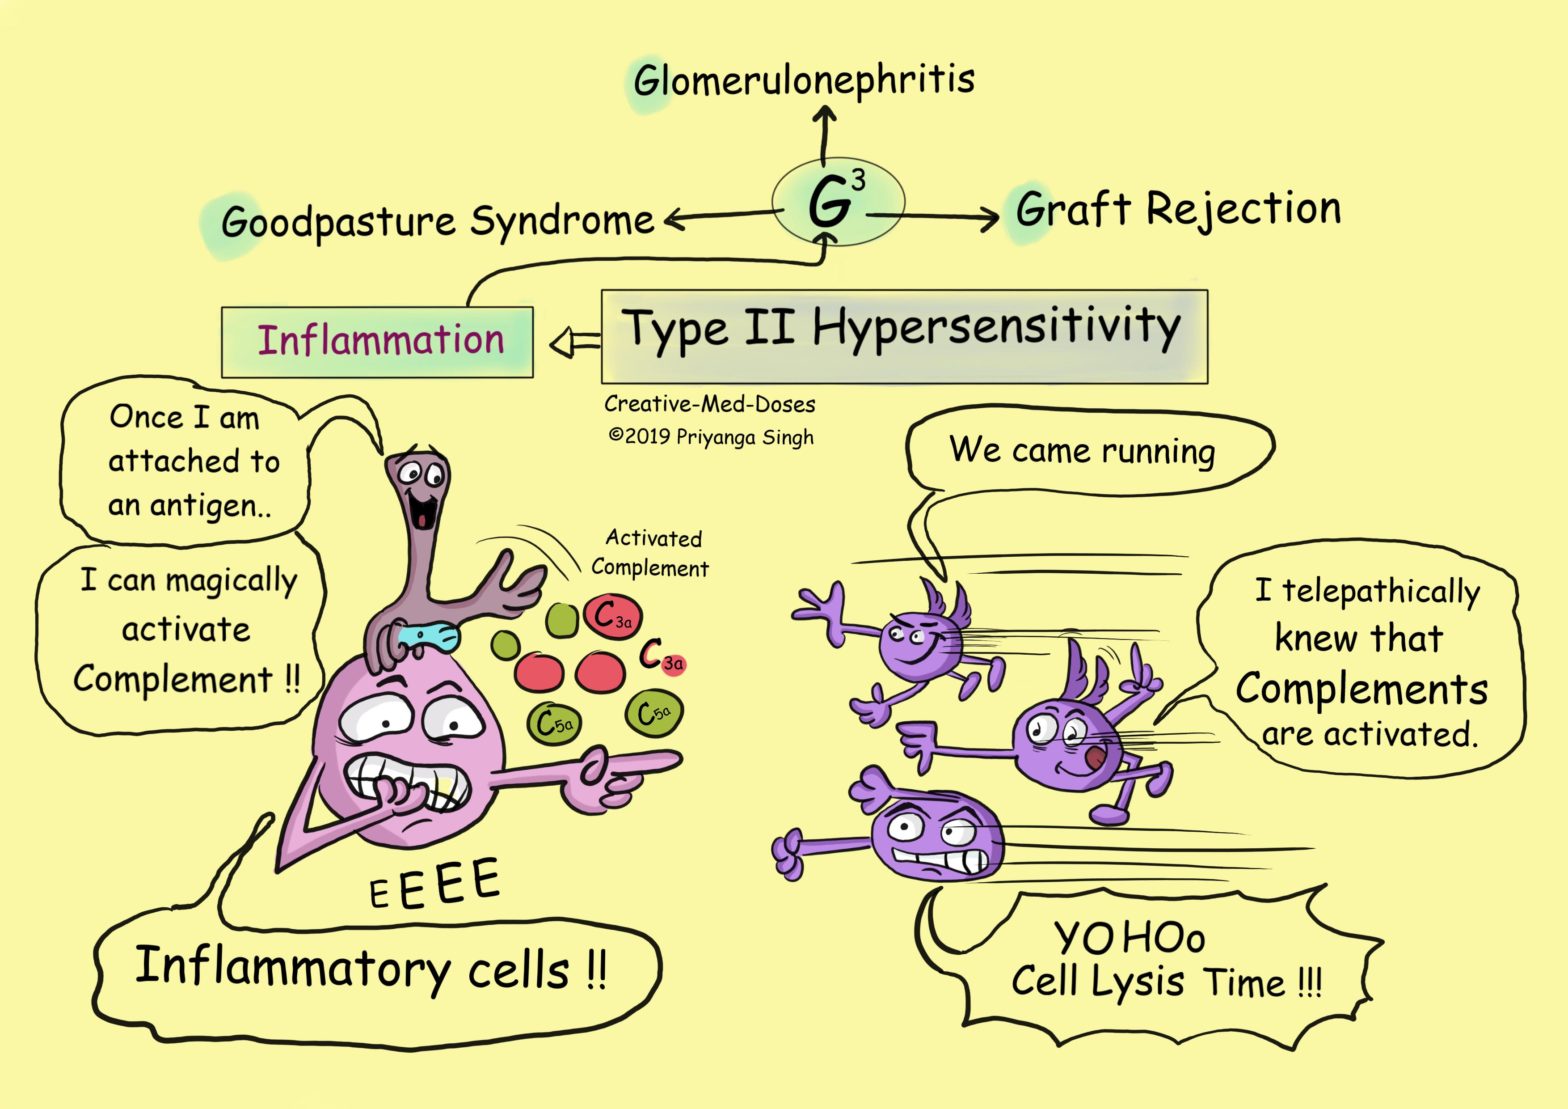 Type II hypersensitivity - Inflammation